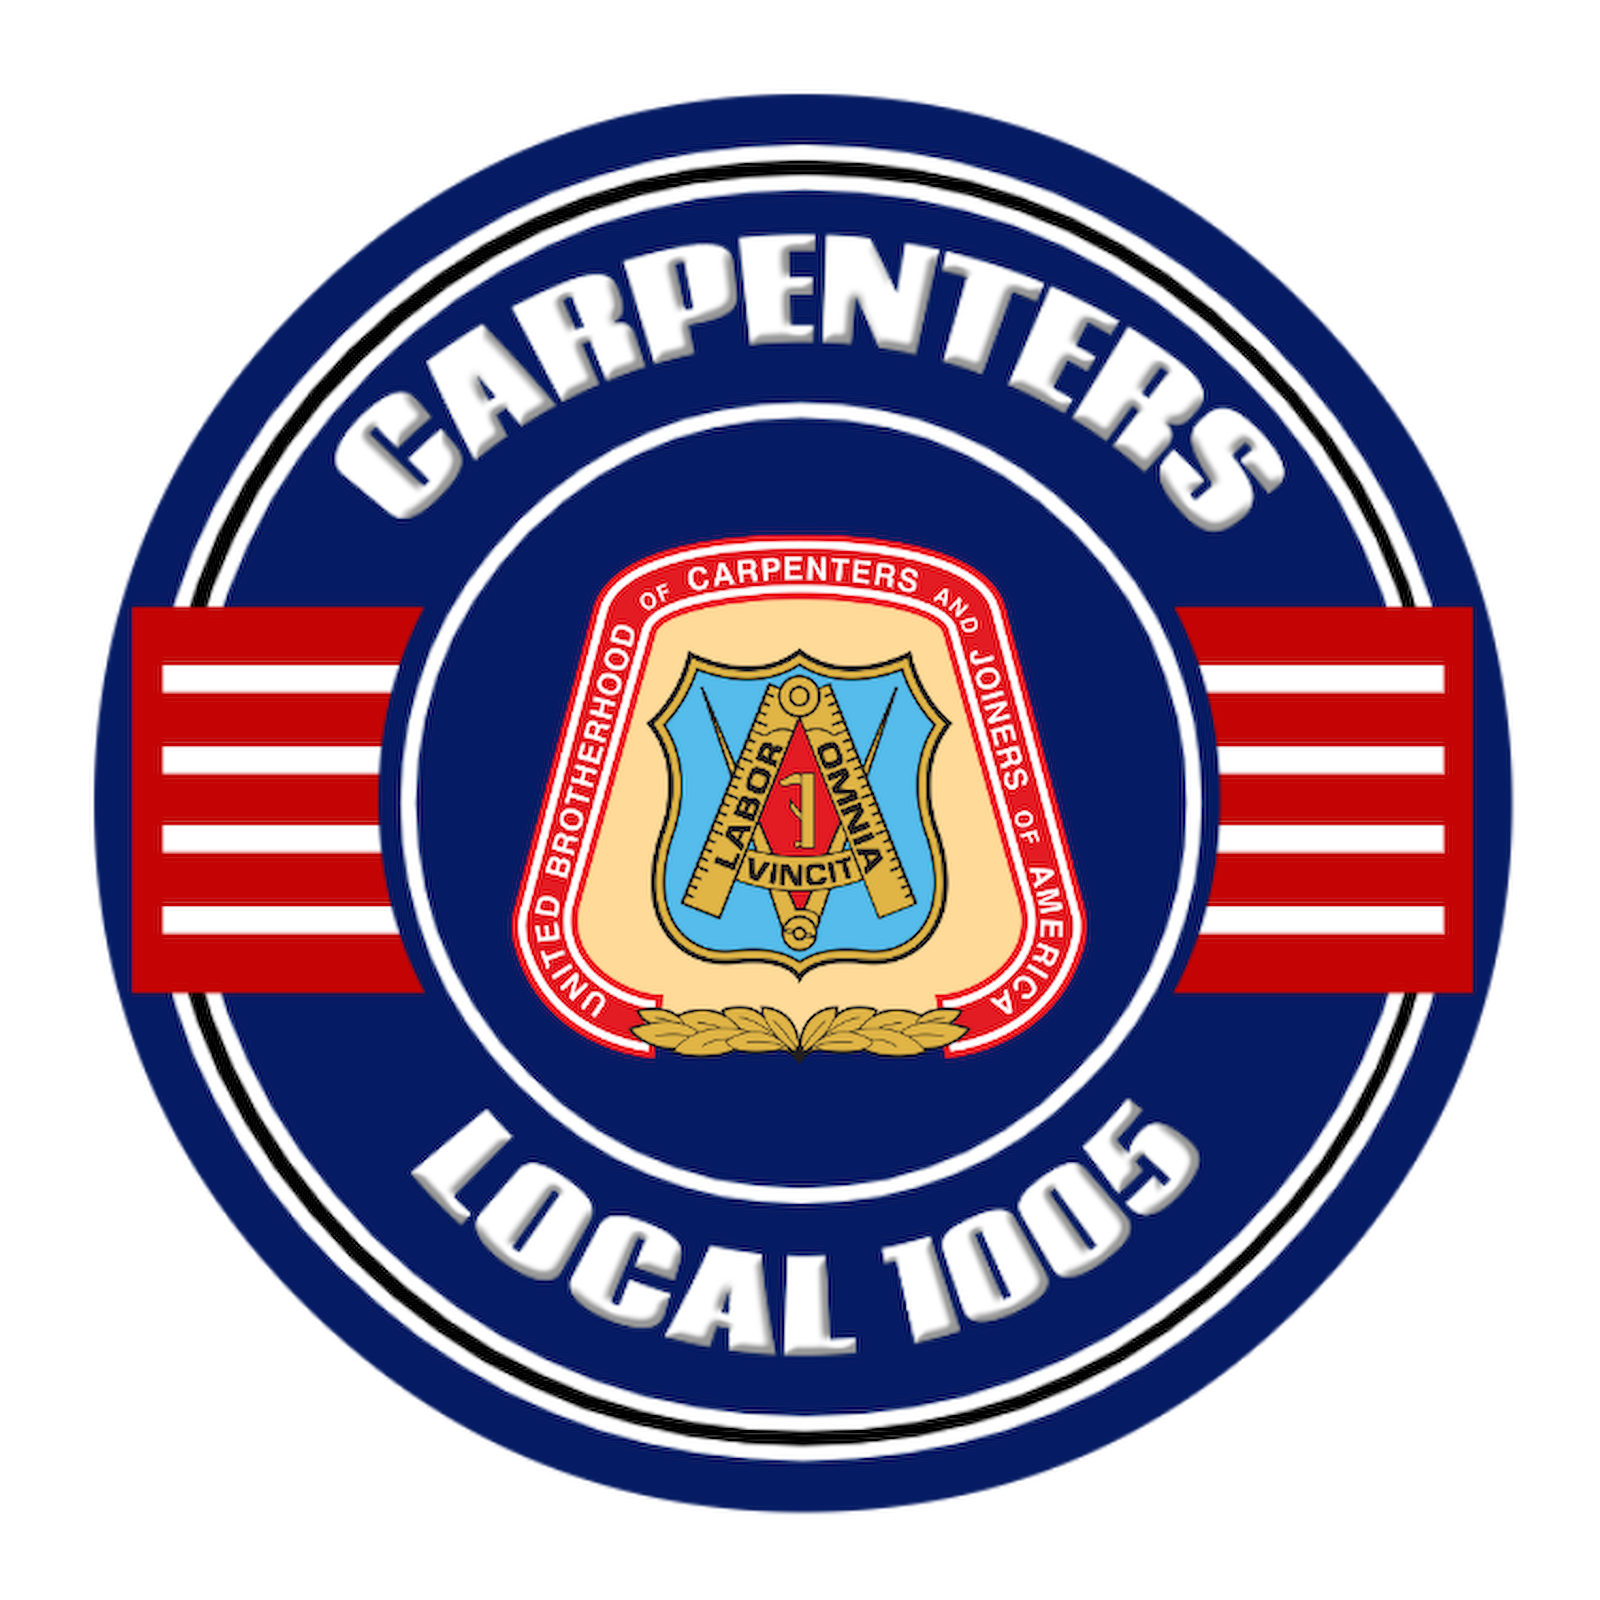 Indiana Kentucky Ohio Regional Council of Carpenters